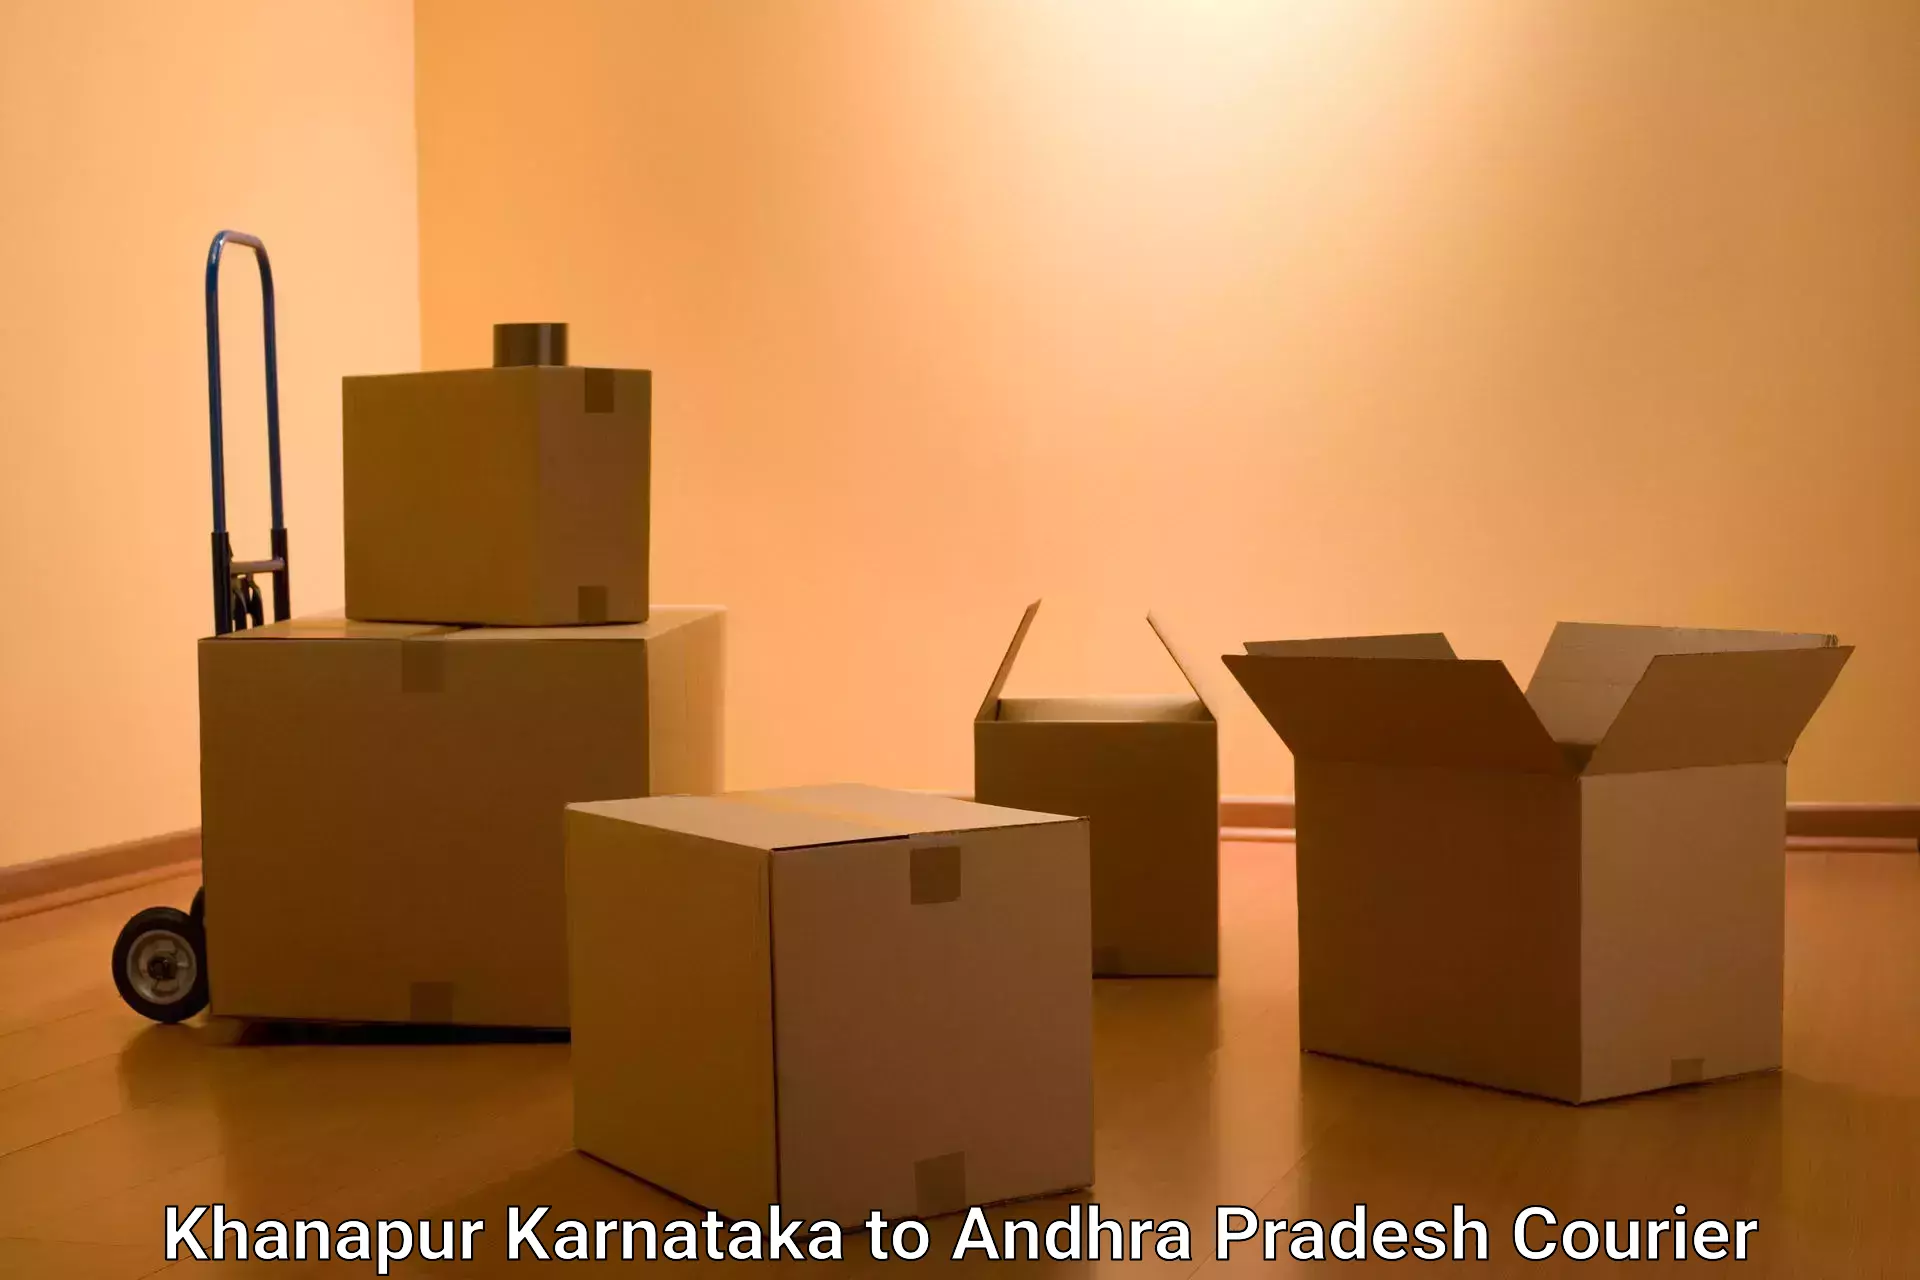 Courier service efficiency Khanapur Karnataka to Kovvur